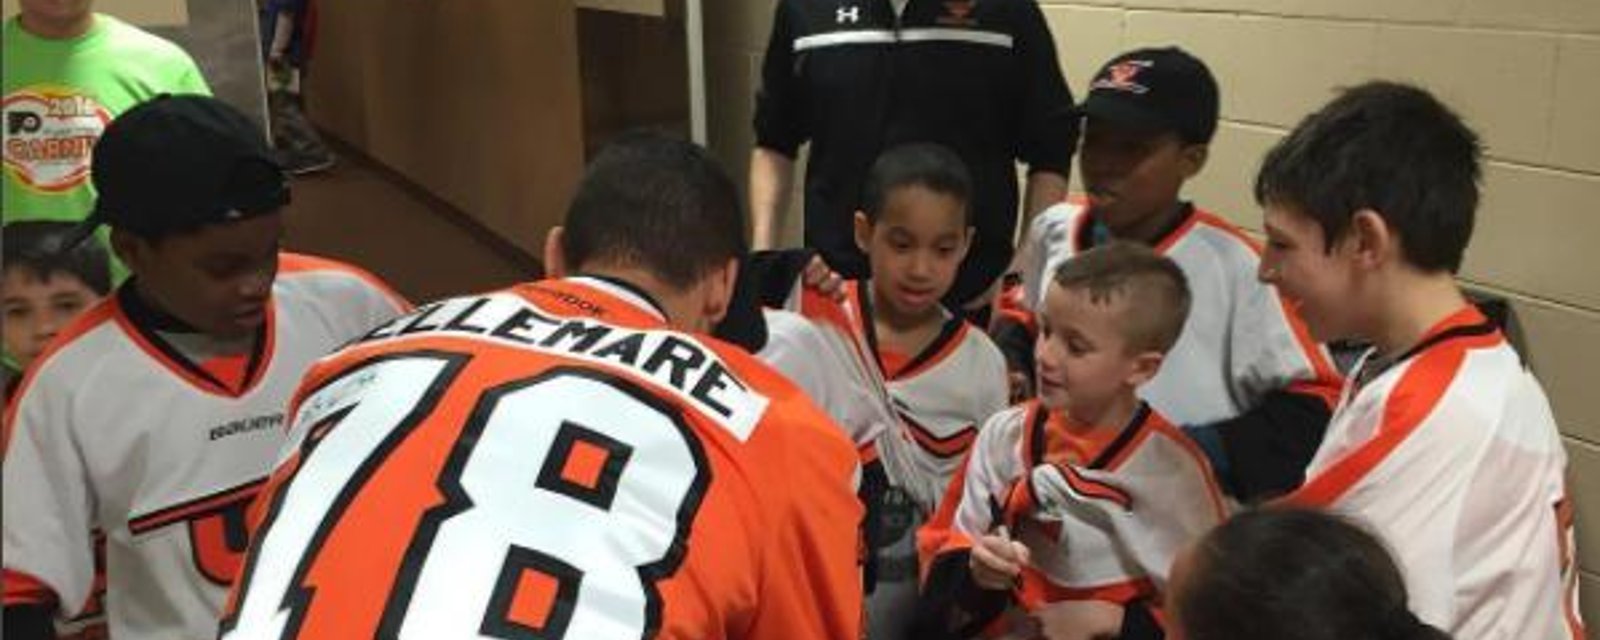 Pierre-Edouard Bellemare leaves heartfelt farewell message to Flyers fans. 